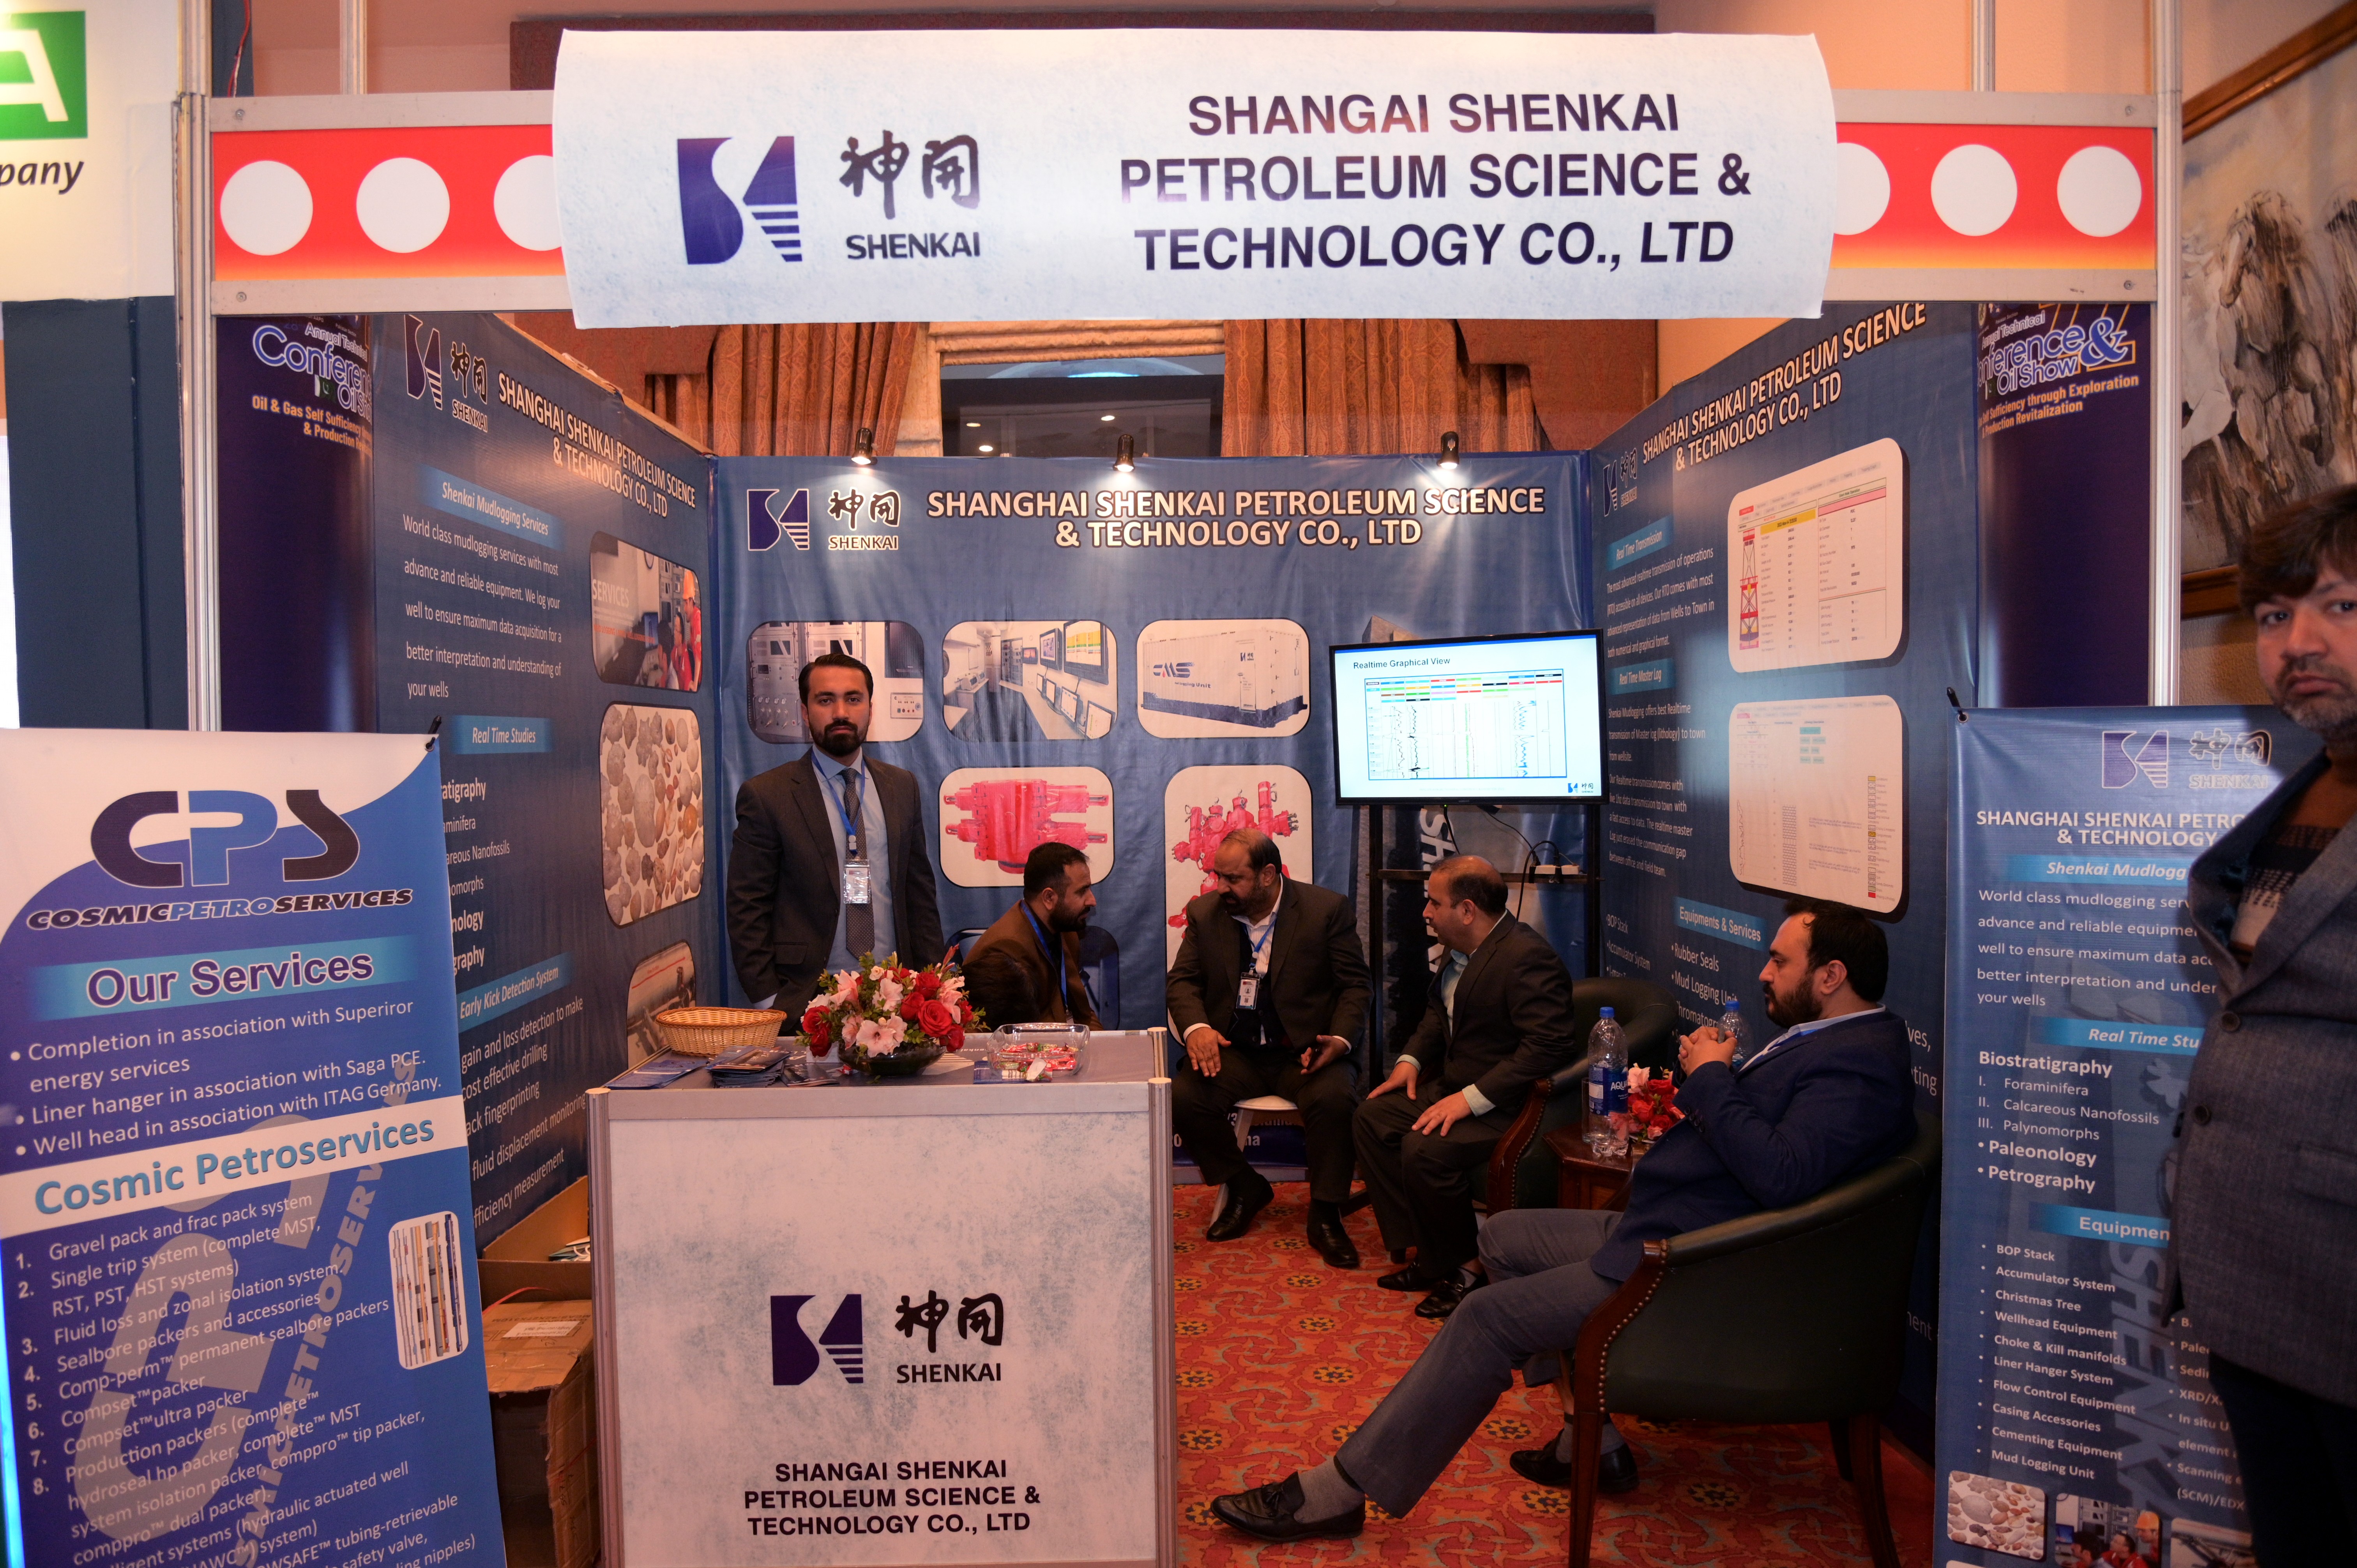 The block representing Shaingai Shenkai Petroleum Science and Technology co Ltd